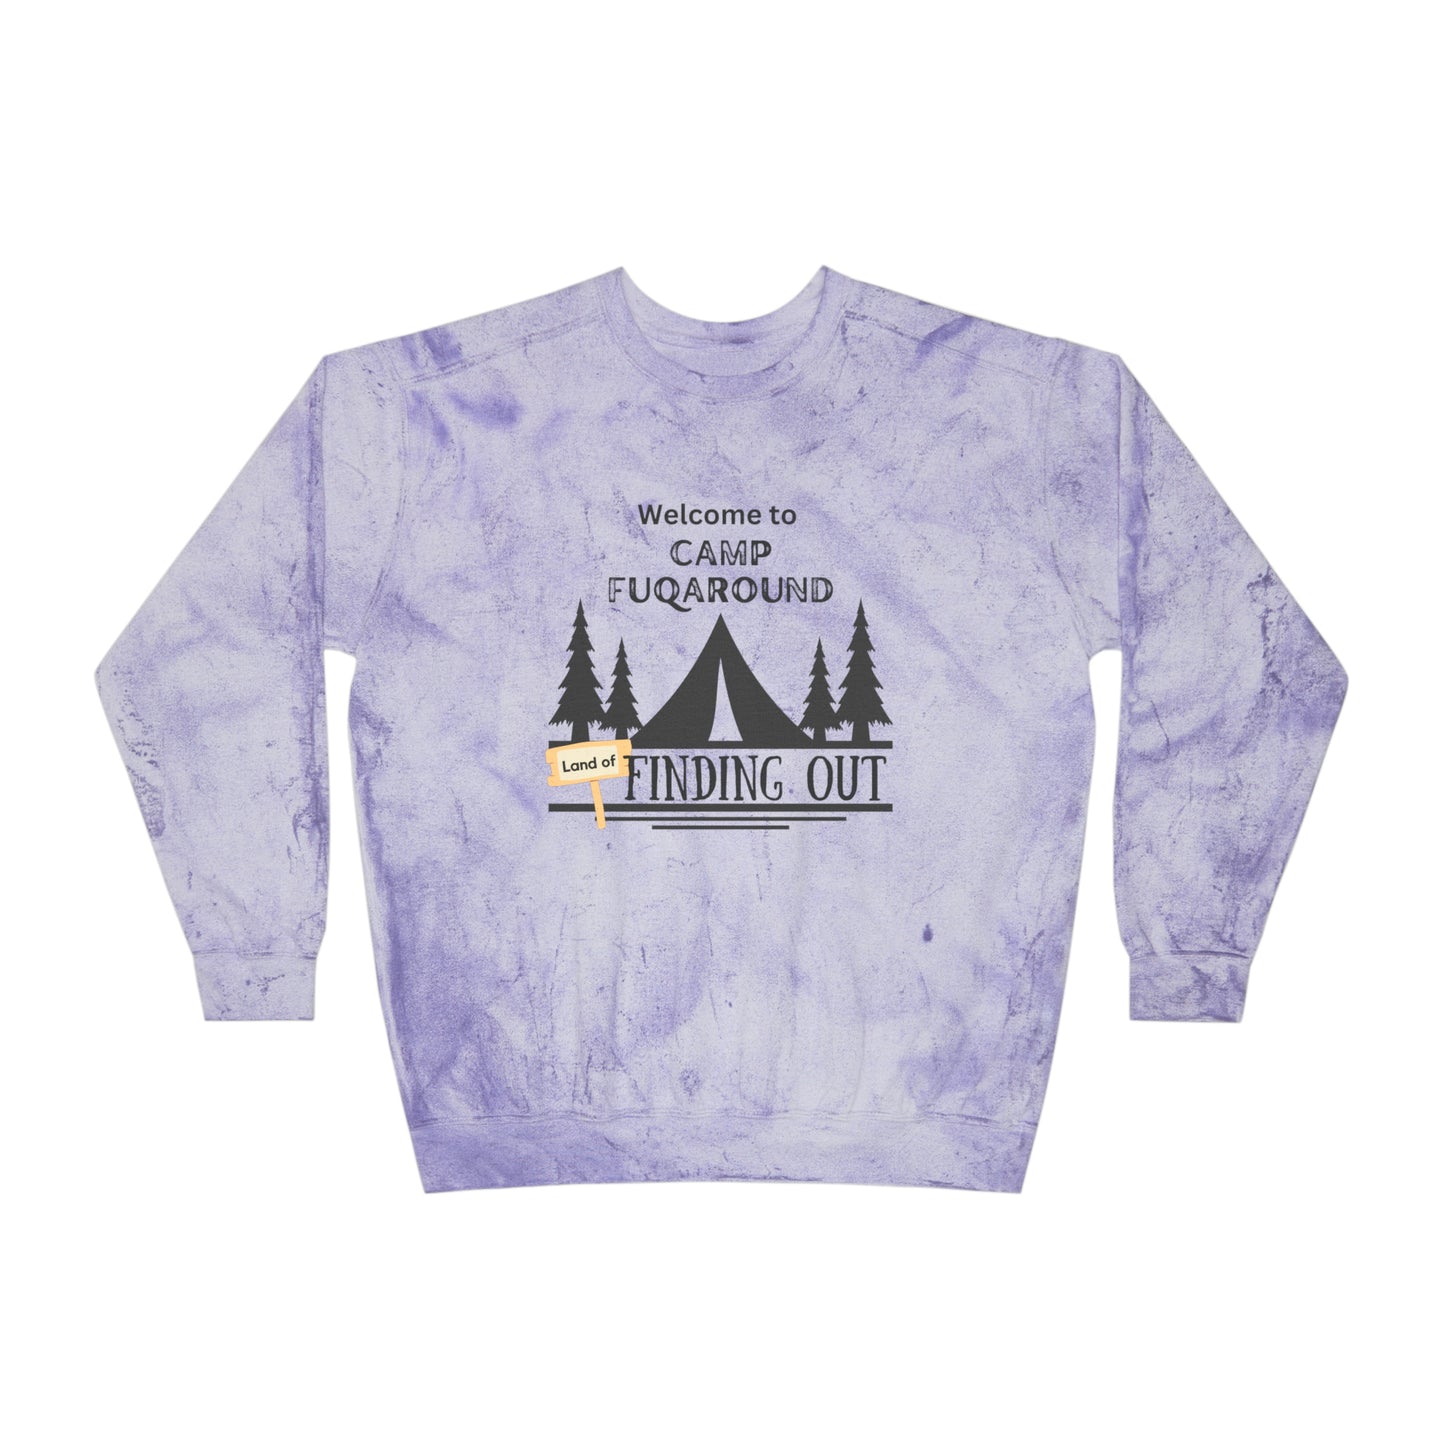 Camp Fckaround sweashirt - Sassy quote sweatshirt - Bestie sweatshirt gift